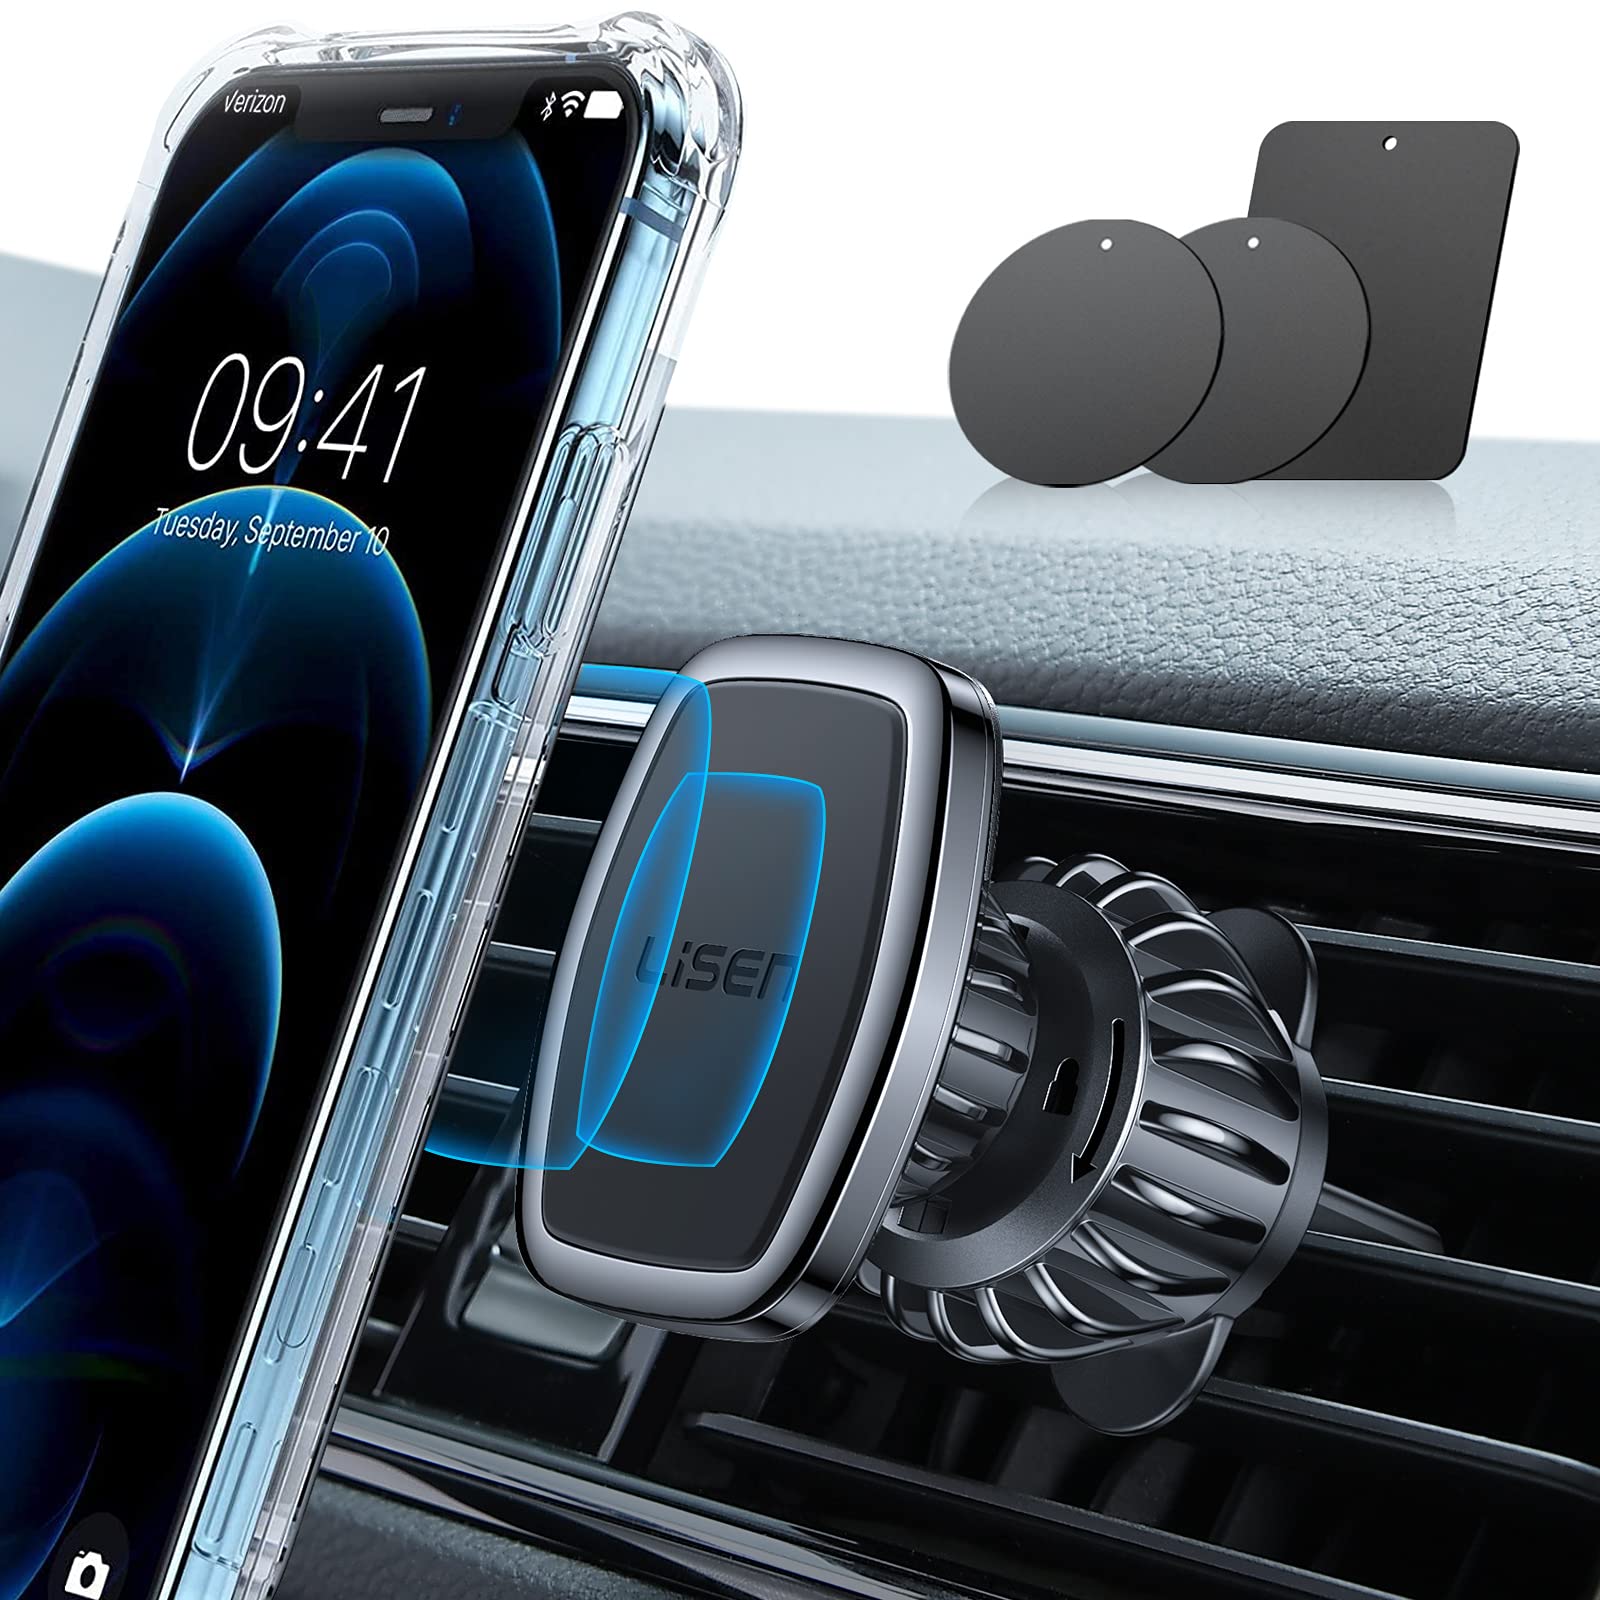 Lisen Magnetic Cell Phone Tablet Holder for Car (Black) $6 + Free Shipping w/ Prime or orders $35+